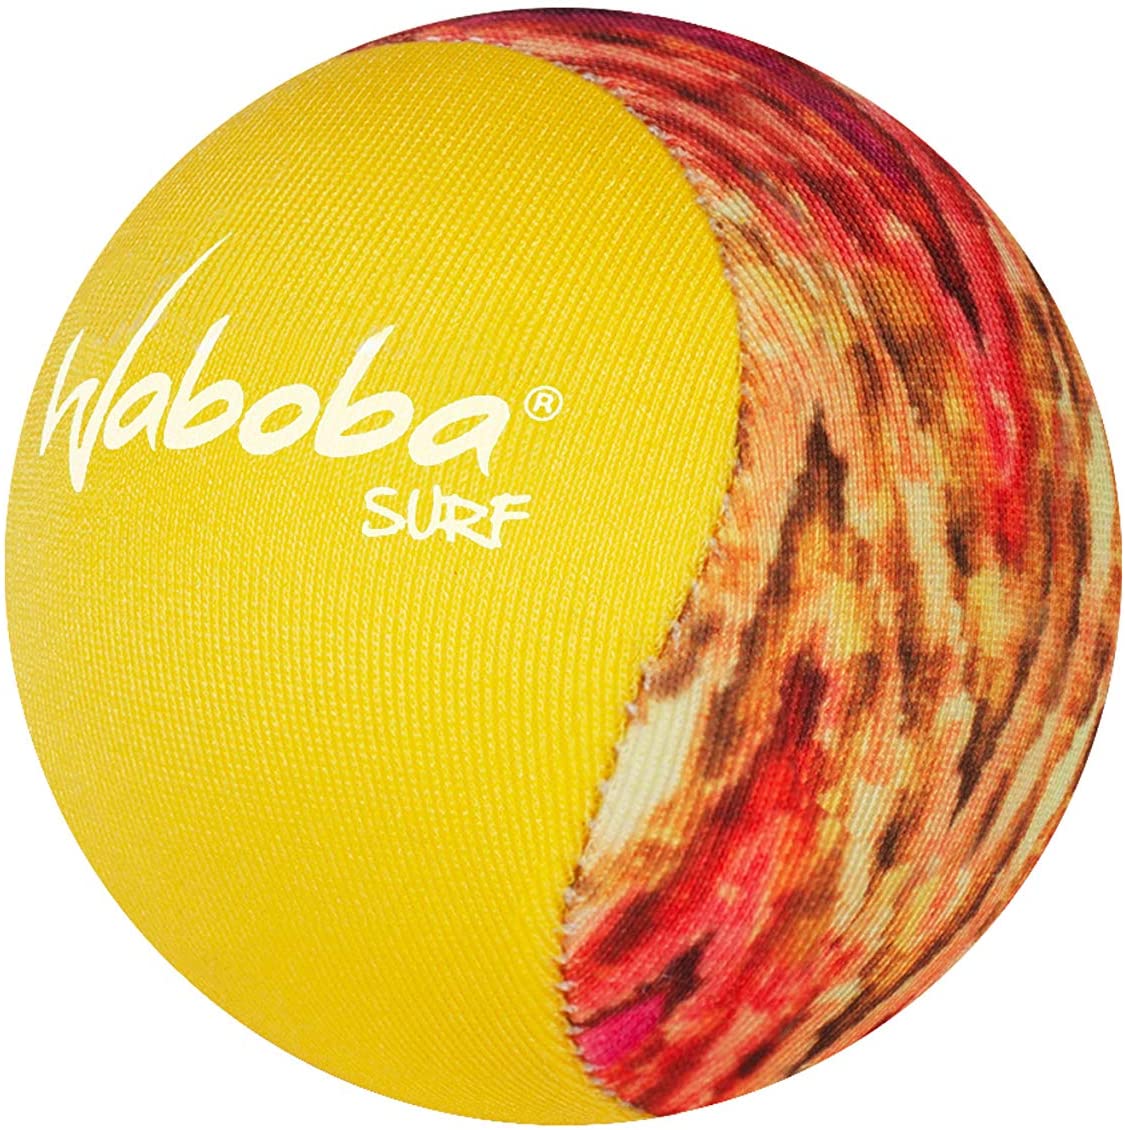 Webber Surf ball bounces on water